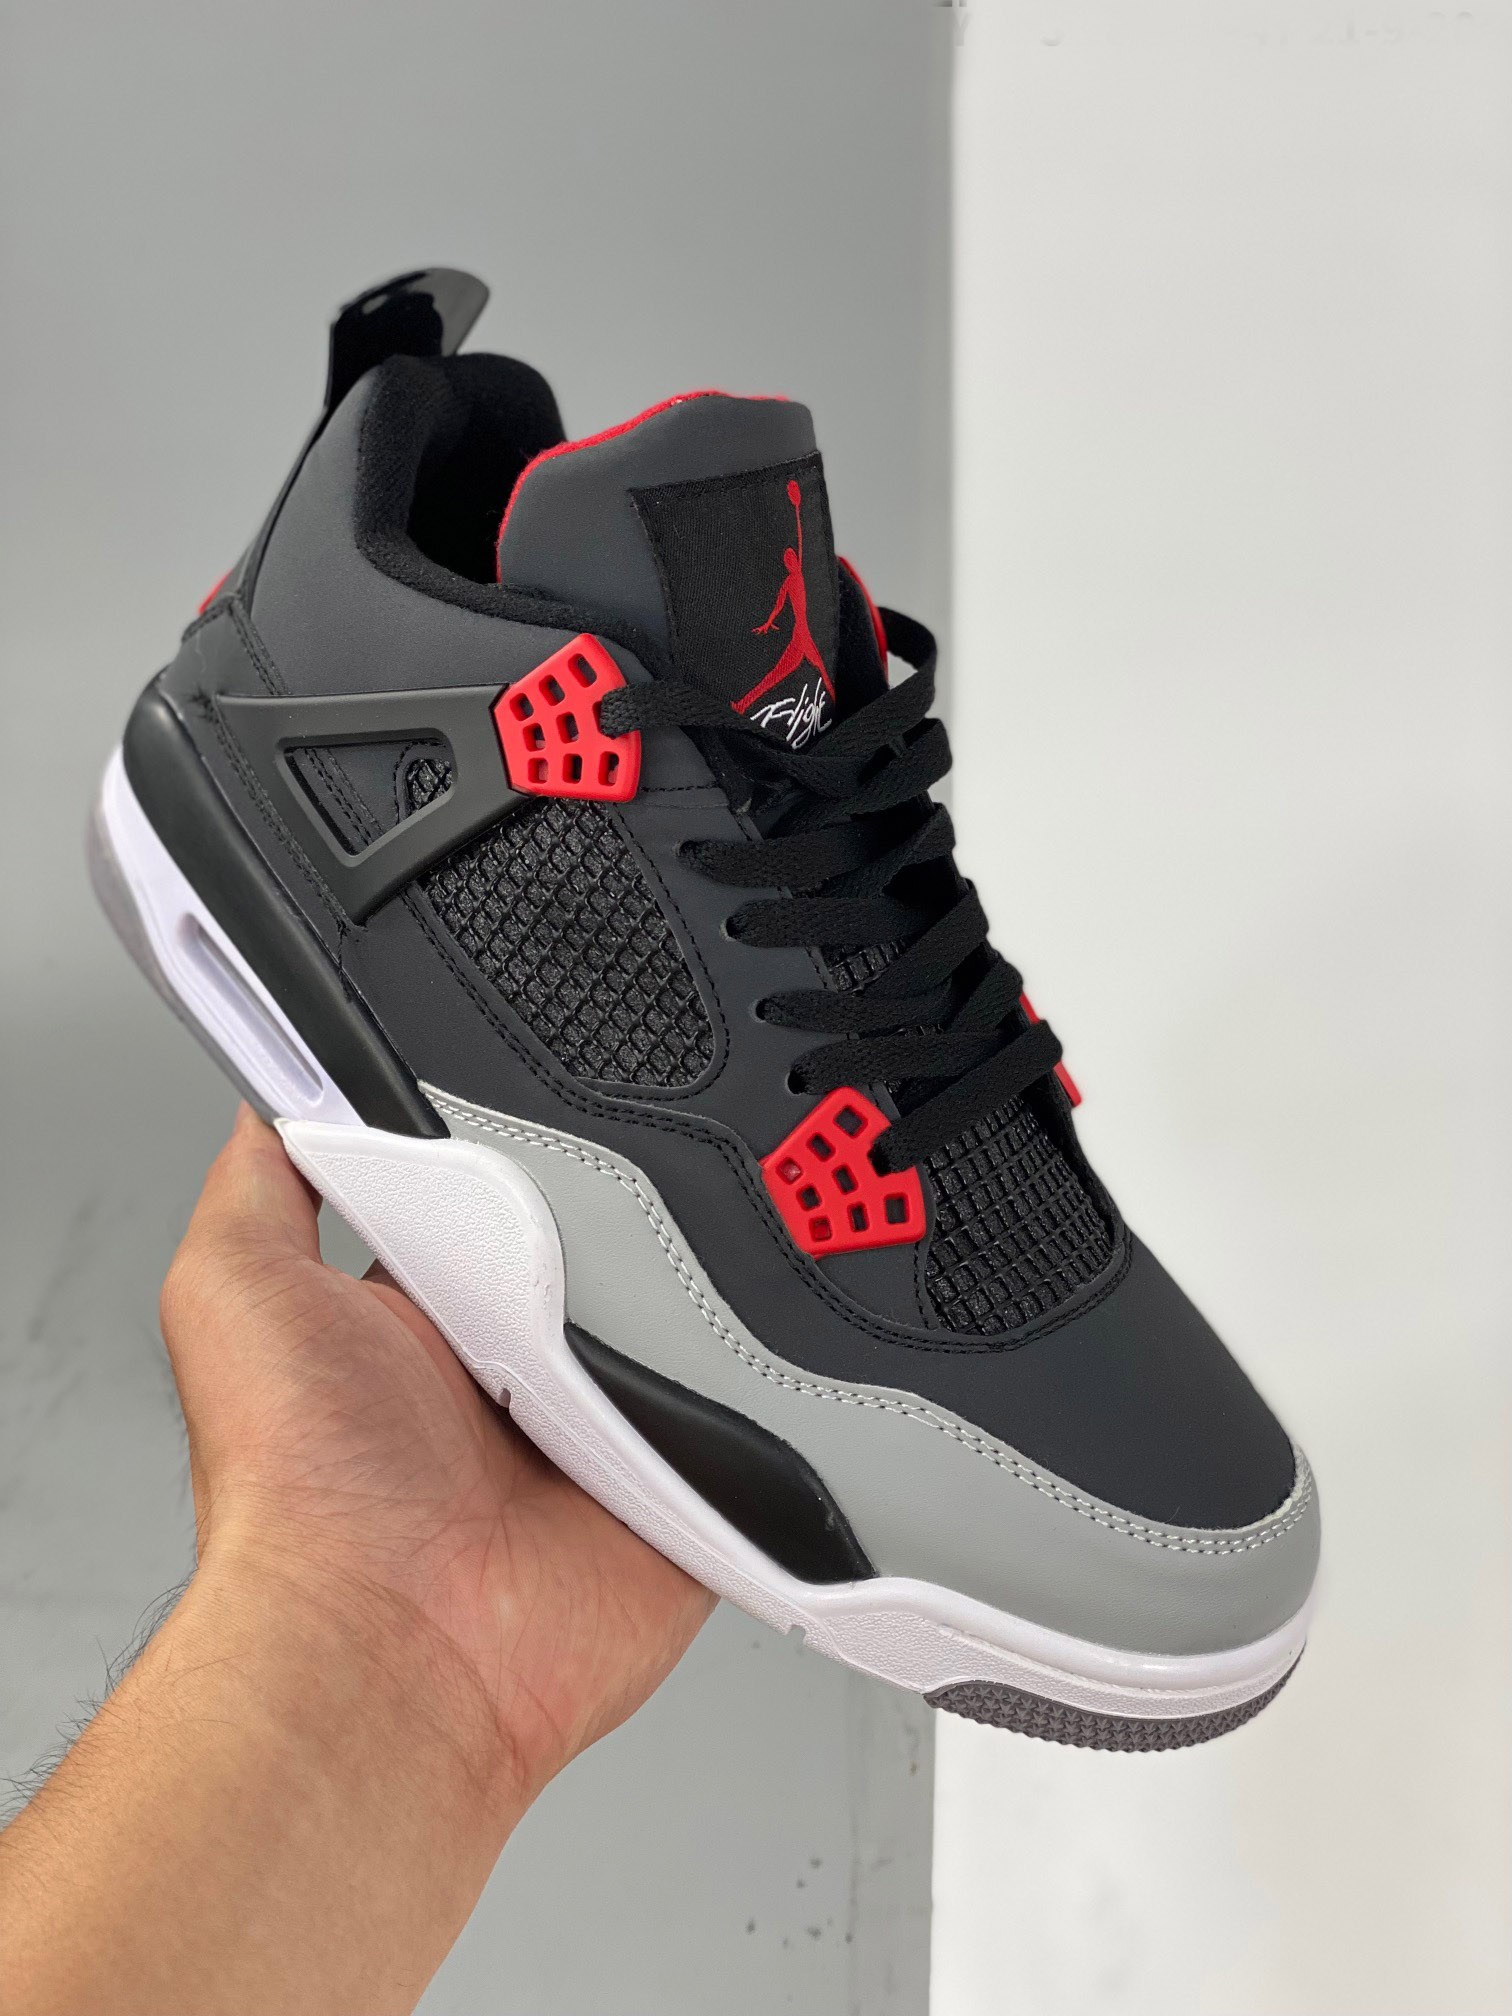 Air Jordan 4 “Infrared” Dark Grey/Infrared 23-Black-Cement Grey For Sale –  Sneaker Hello